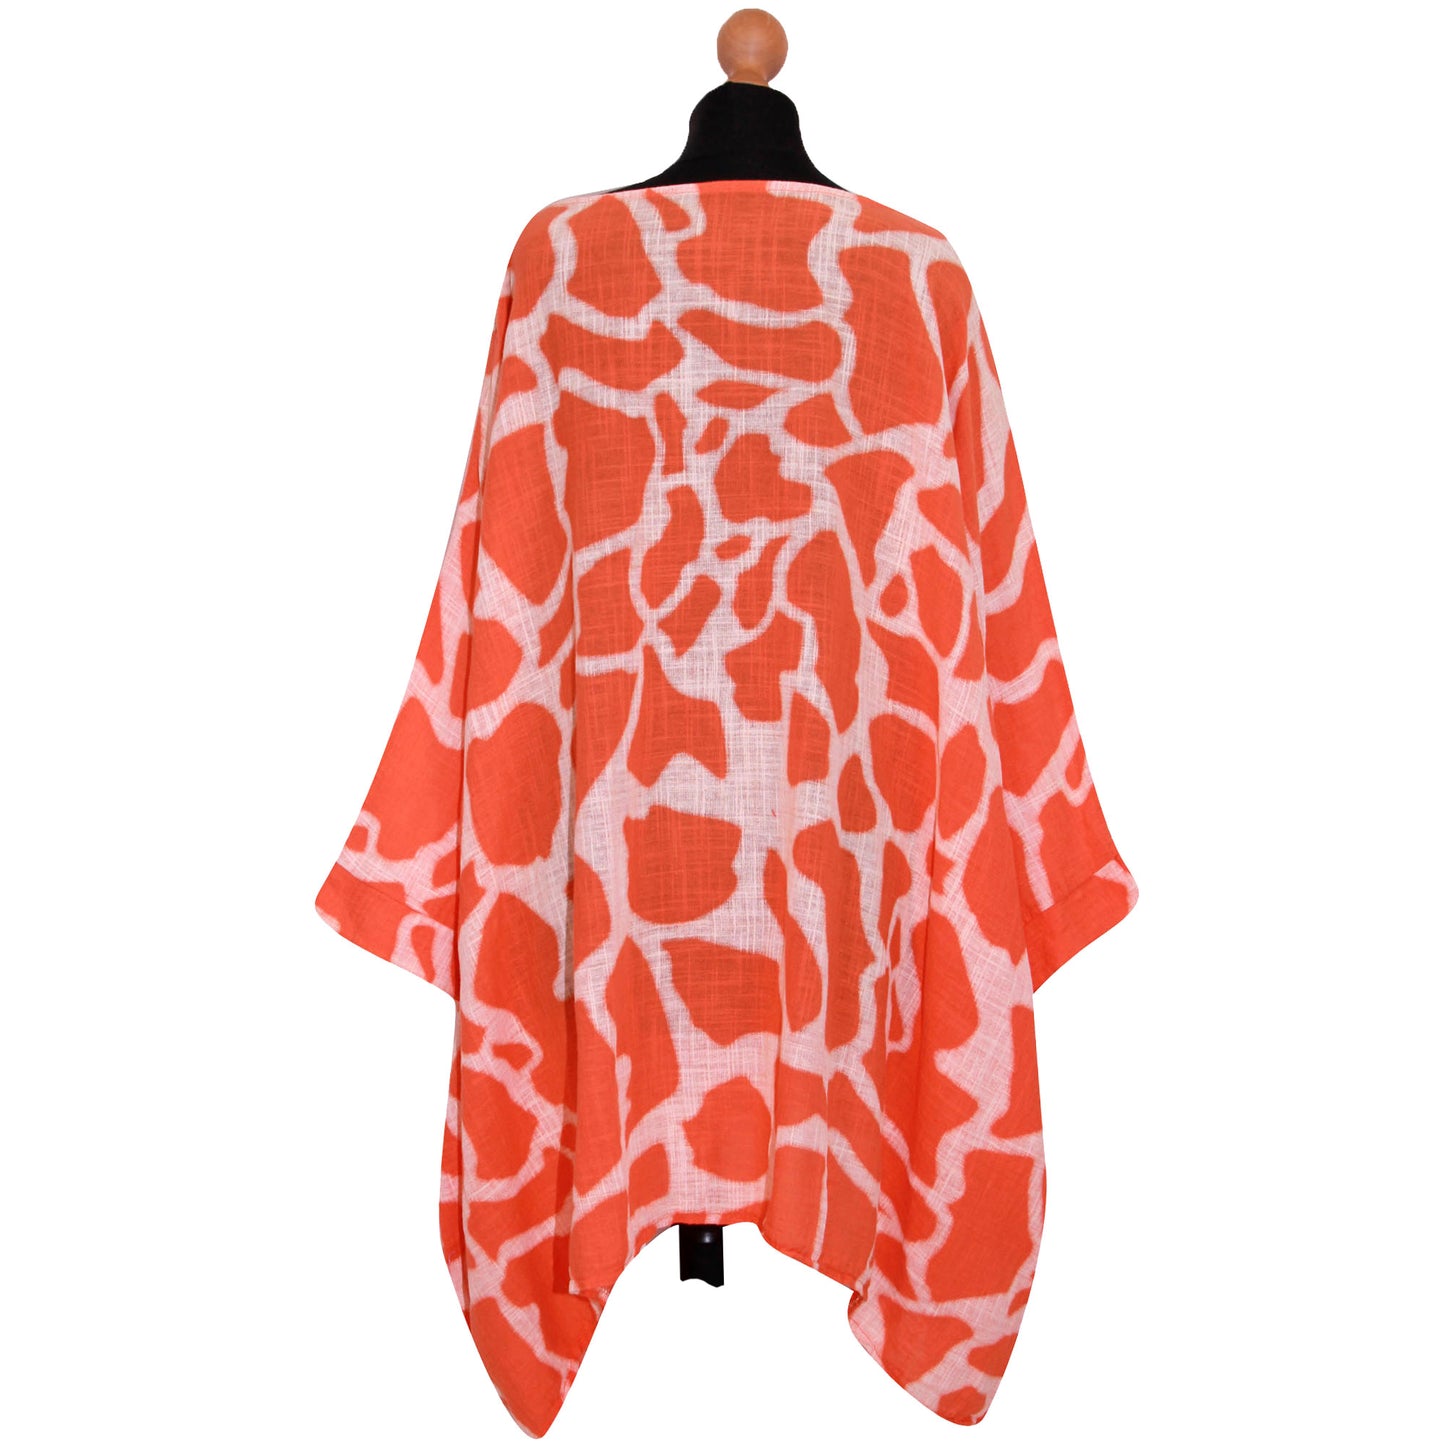 Giraffe Animal Print Ladies Printed Top: Stylish and Trendy Women's Fashion